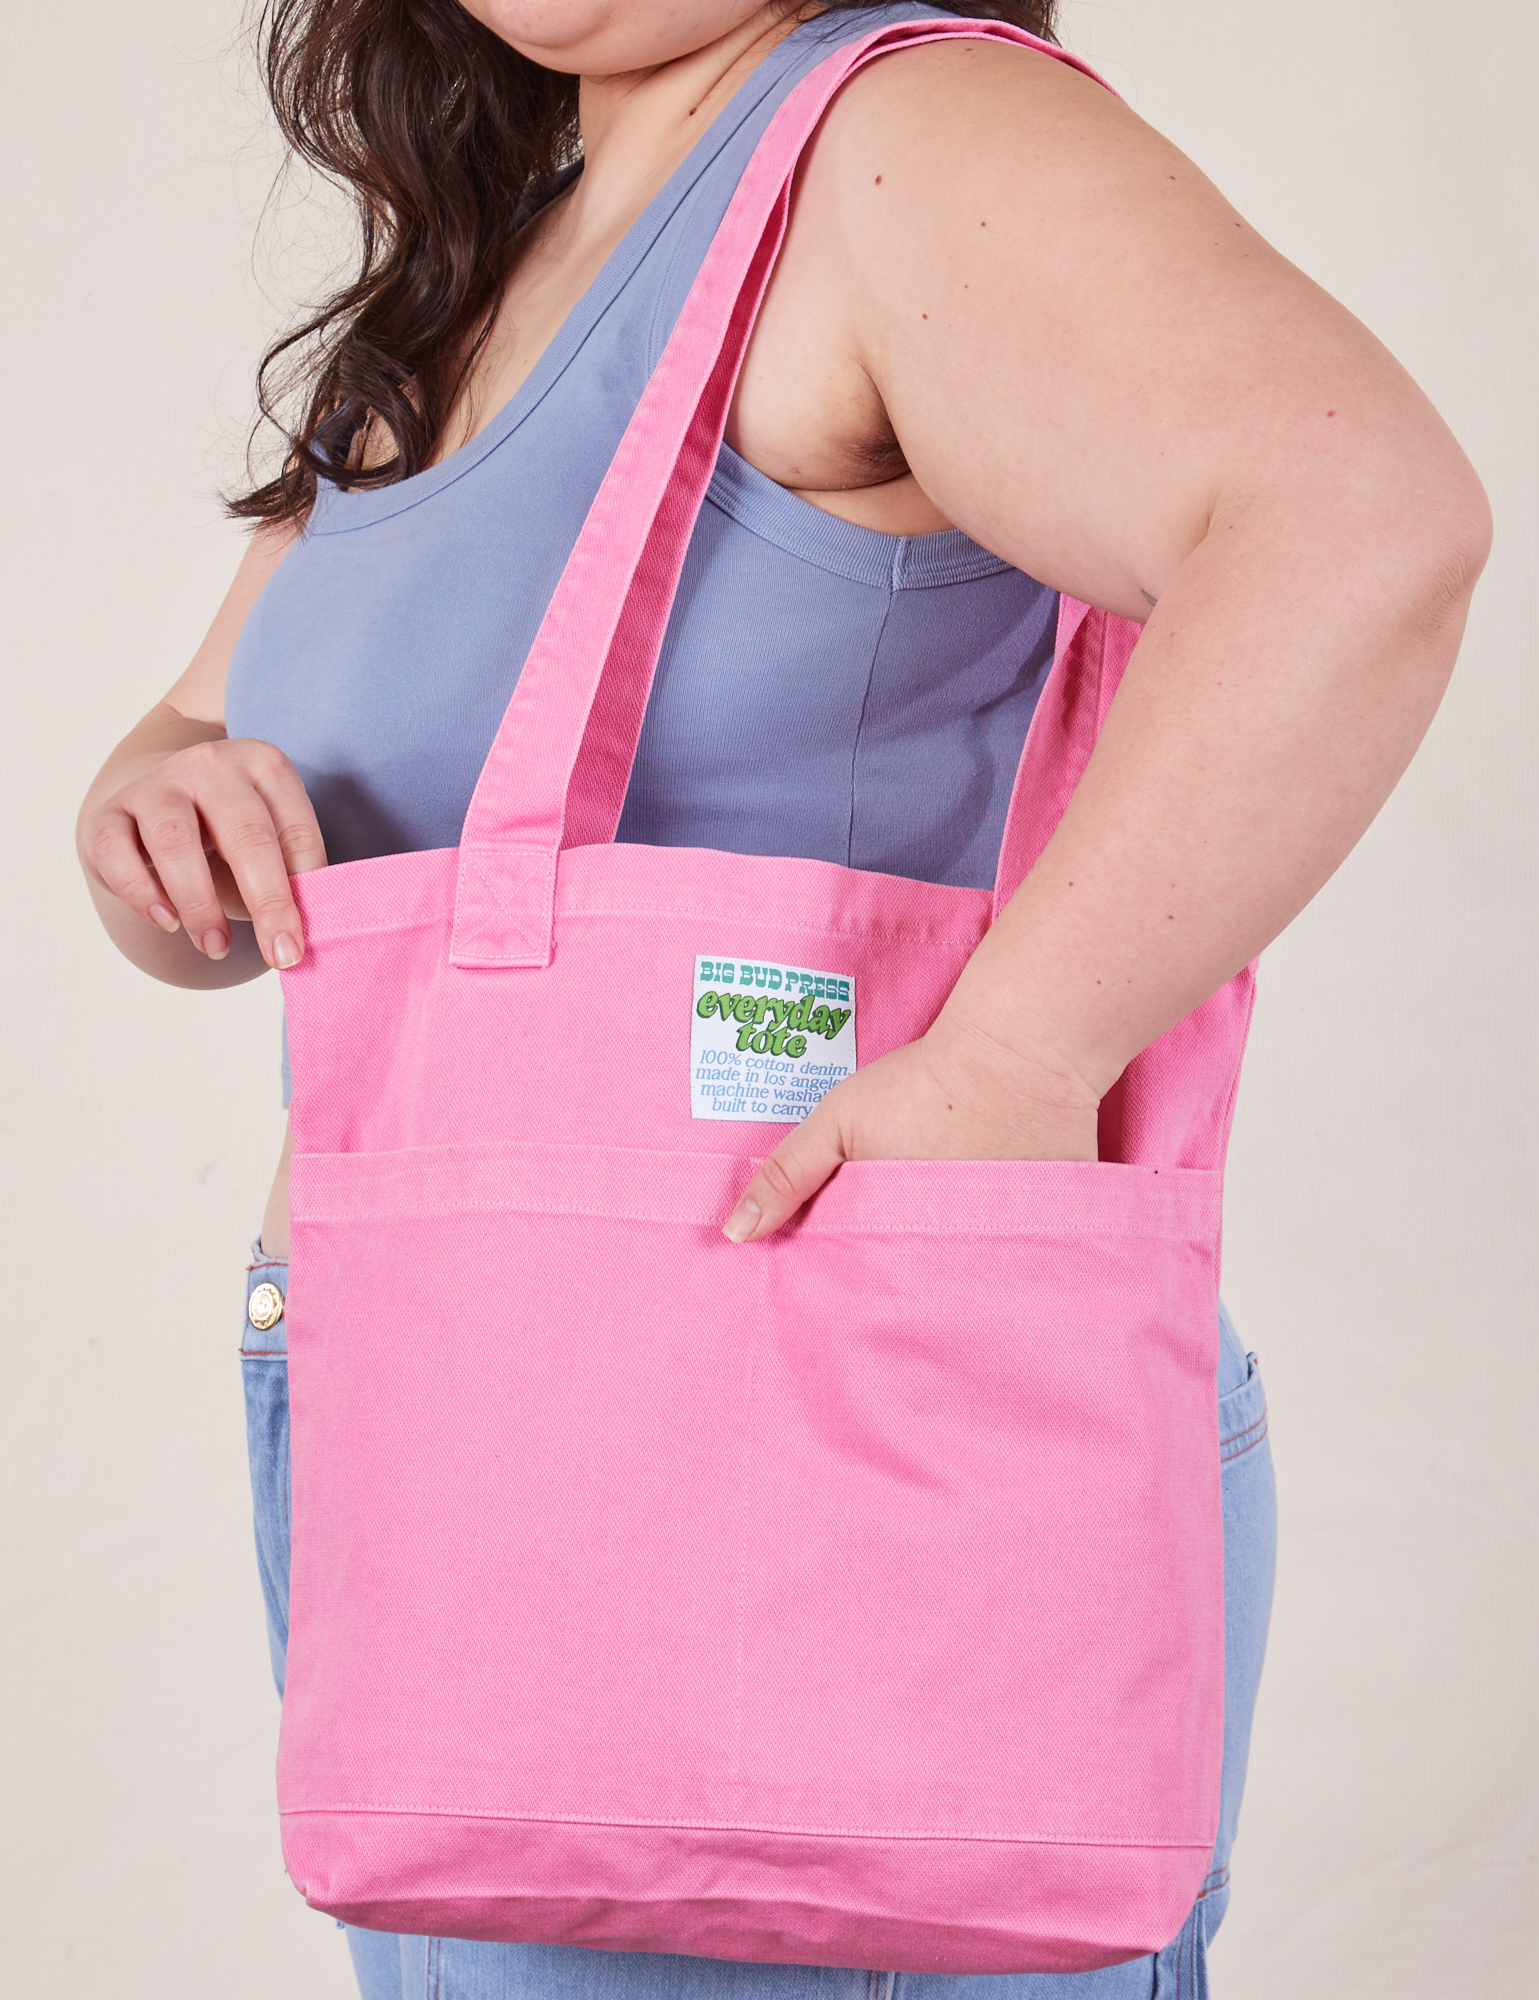 Everyday Tote Bag in Bubblegum Pink worn by model